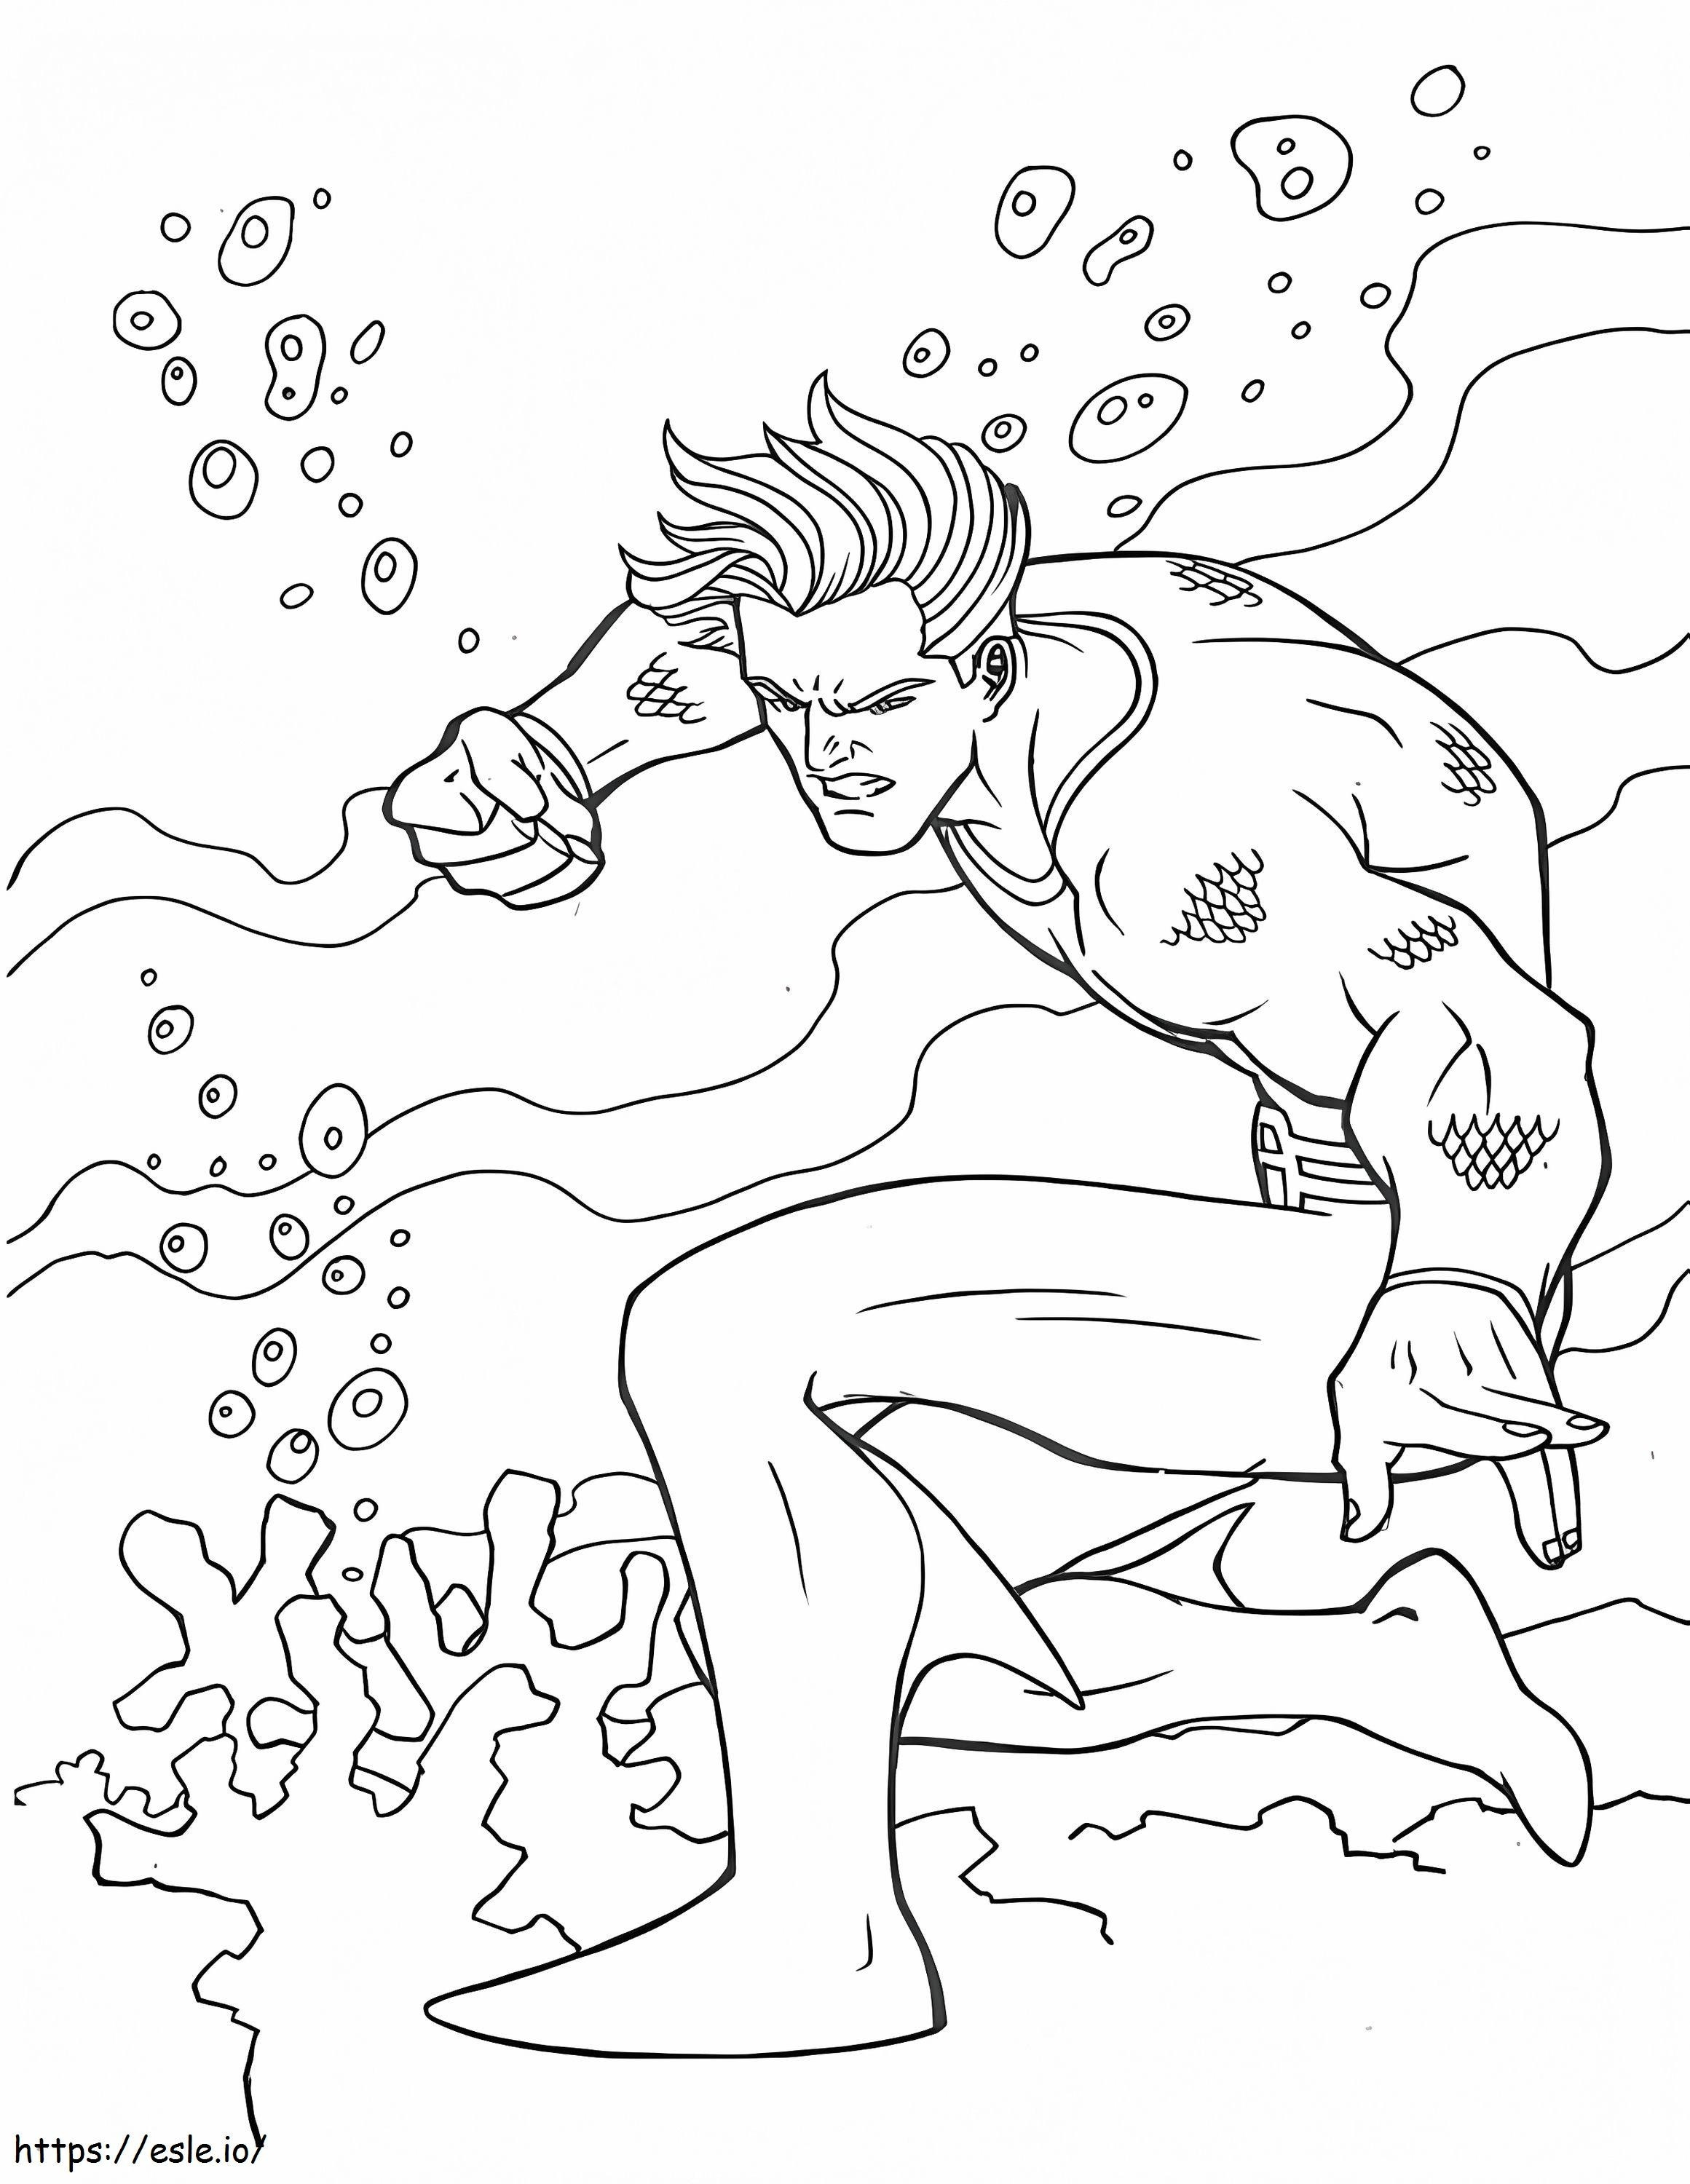 Wütender Aquaman ausmalbilder